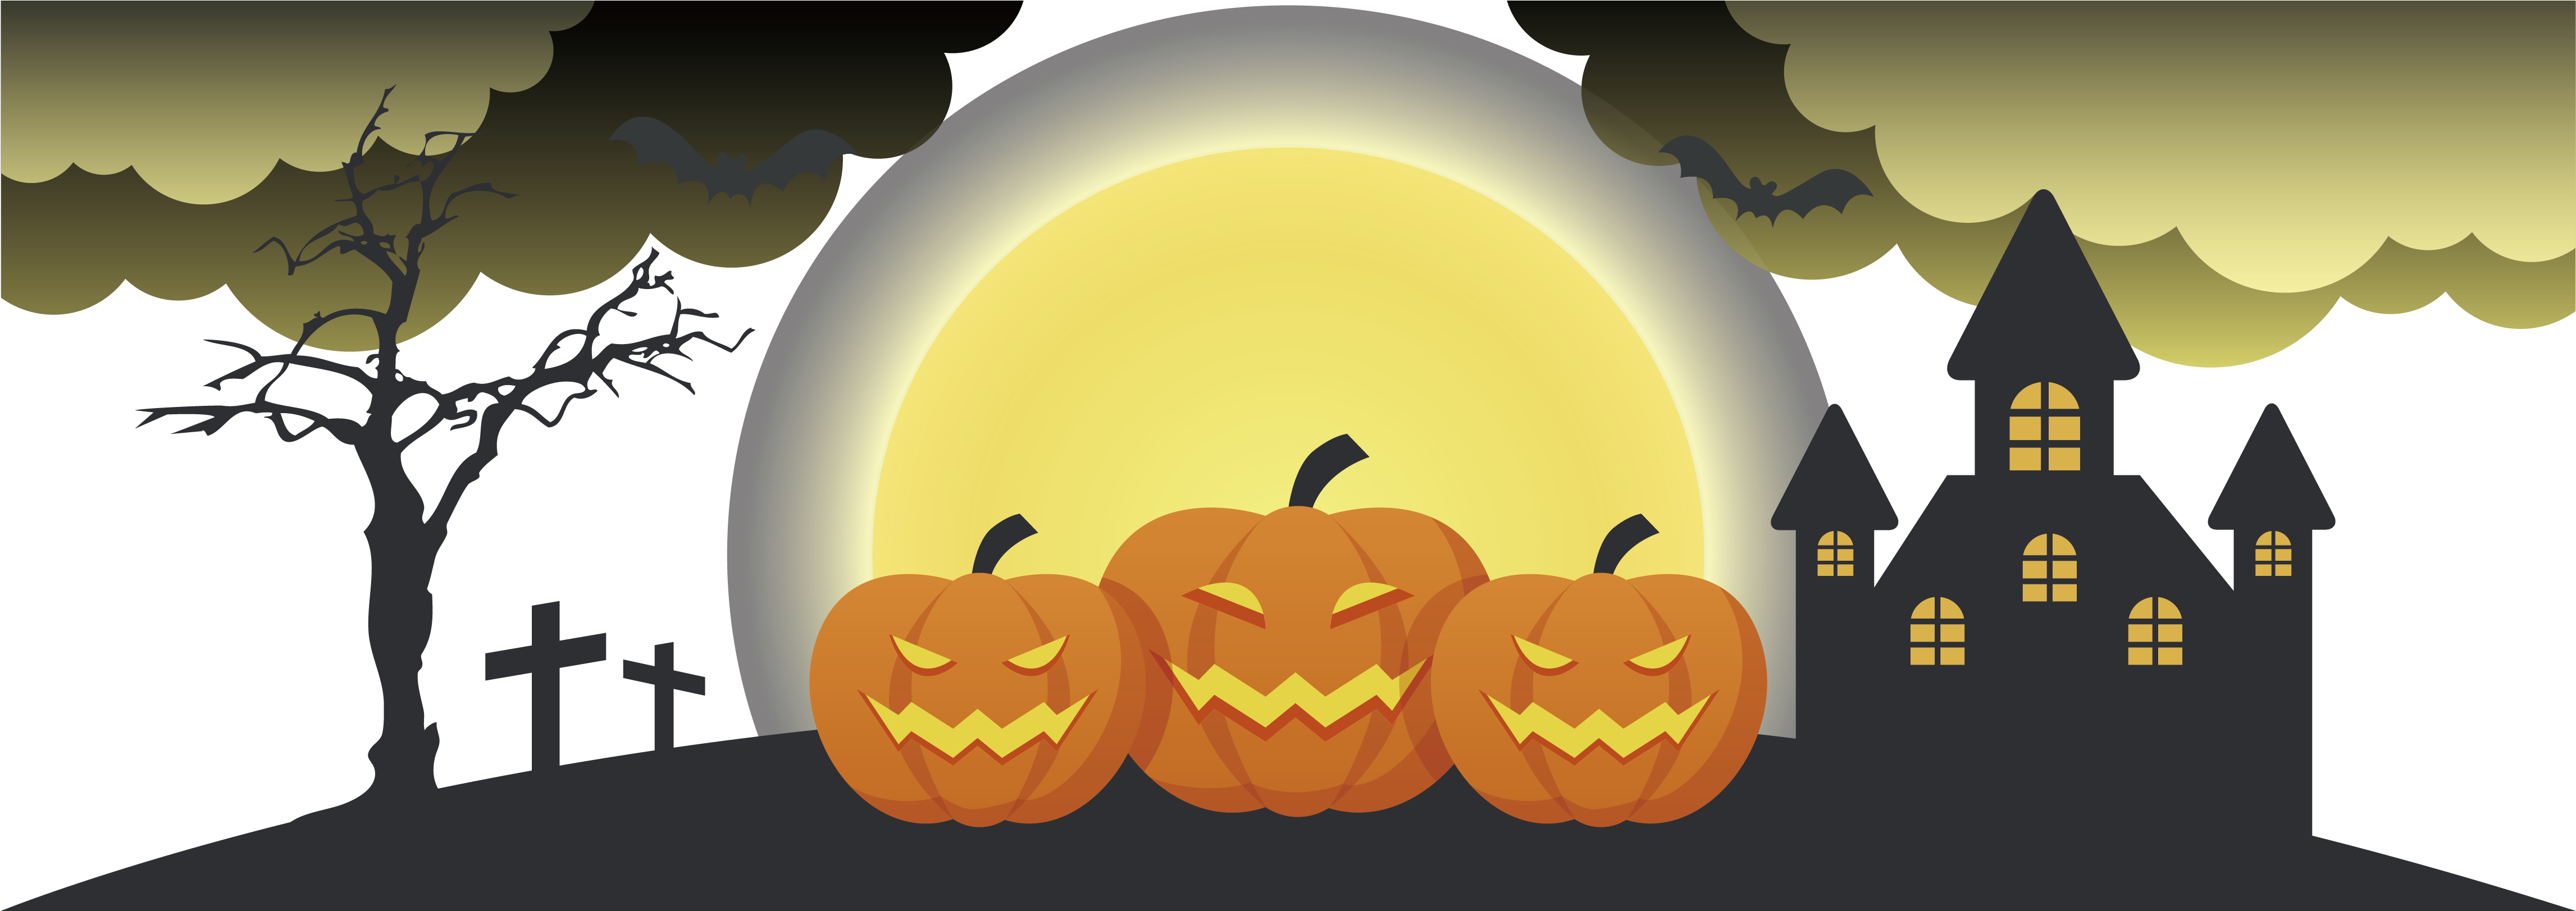 Immagini trasparenti banner di Halloween